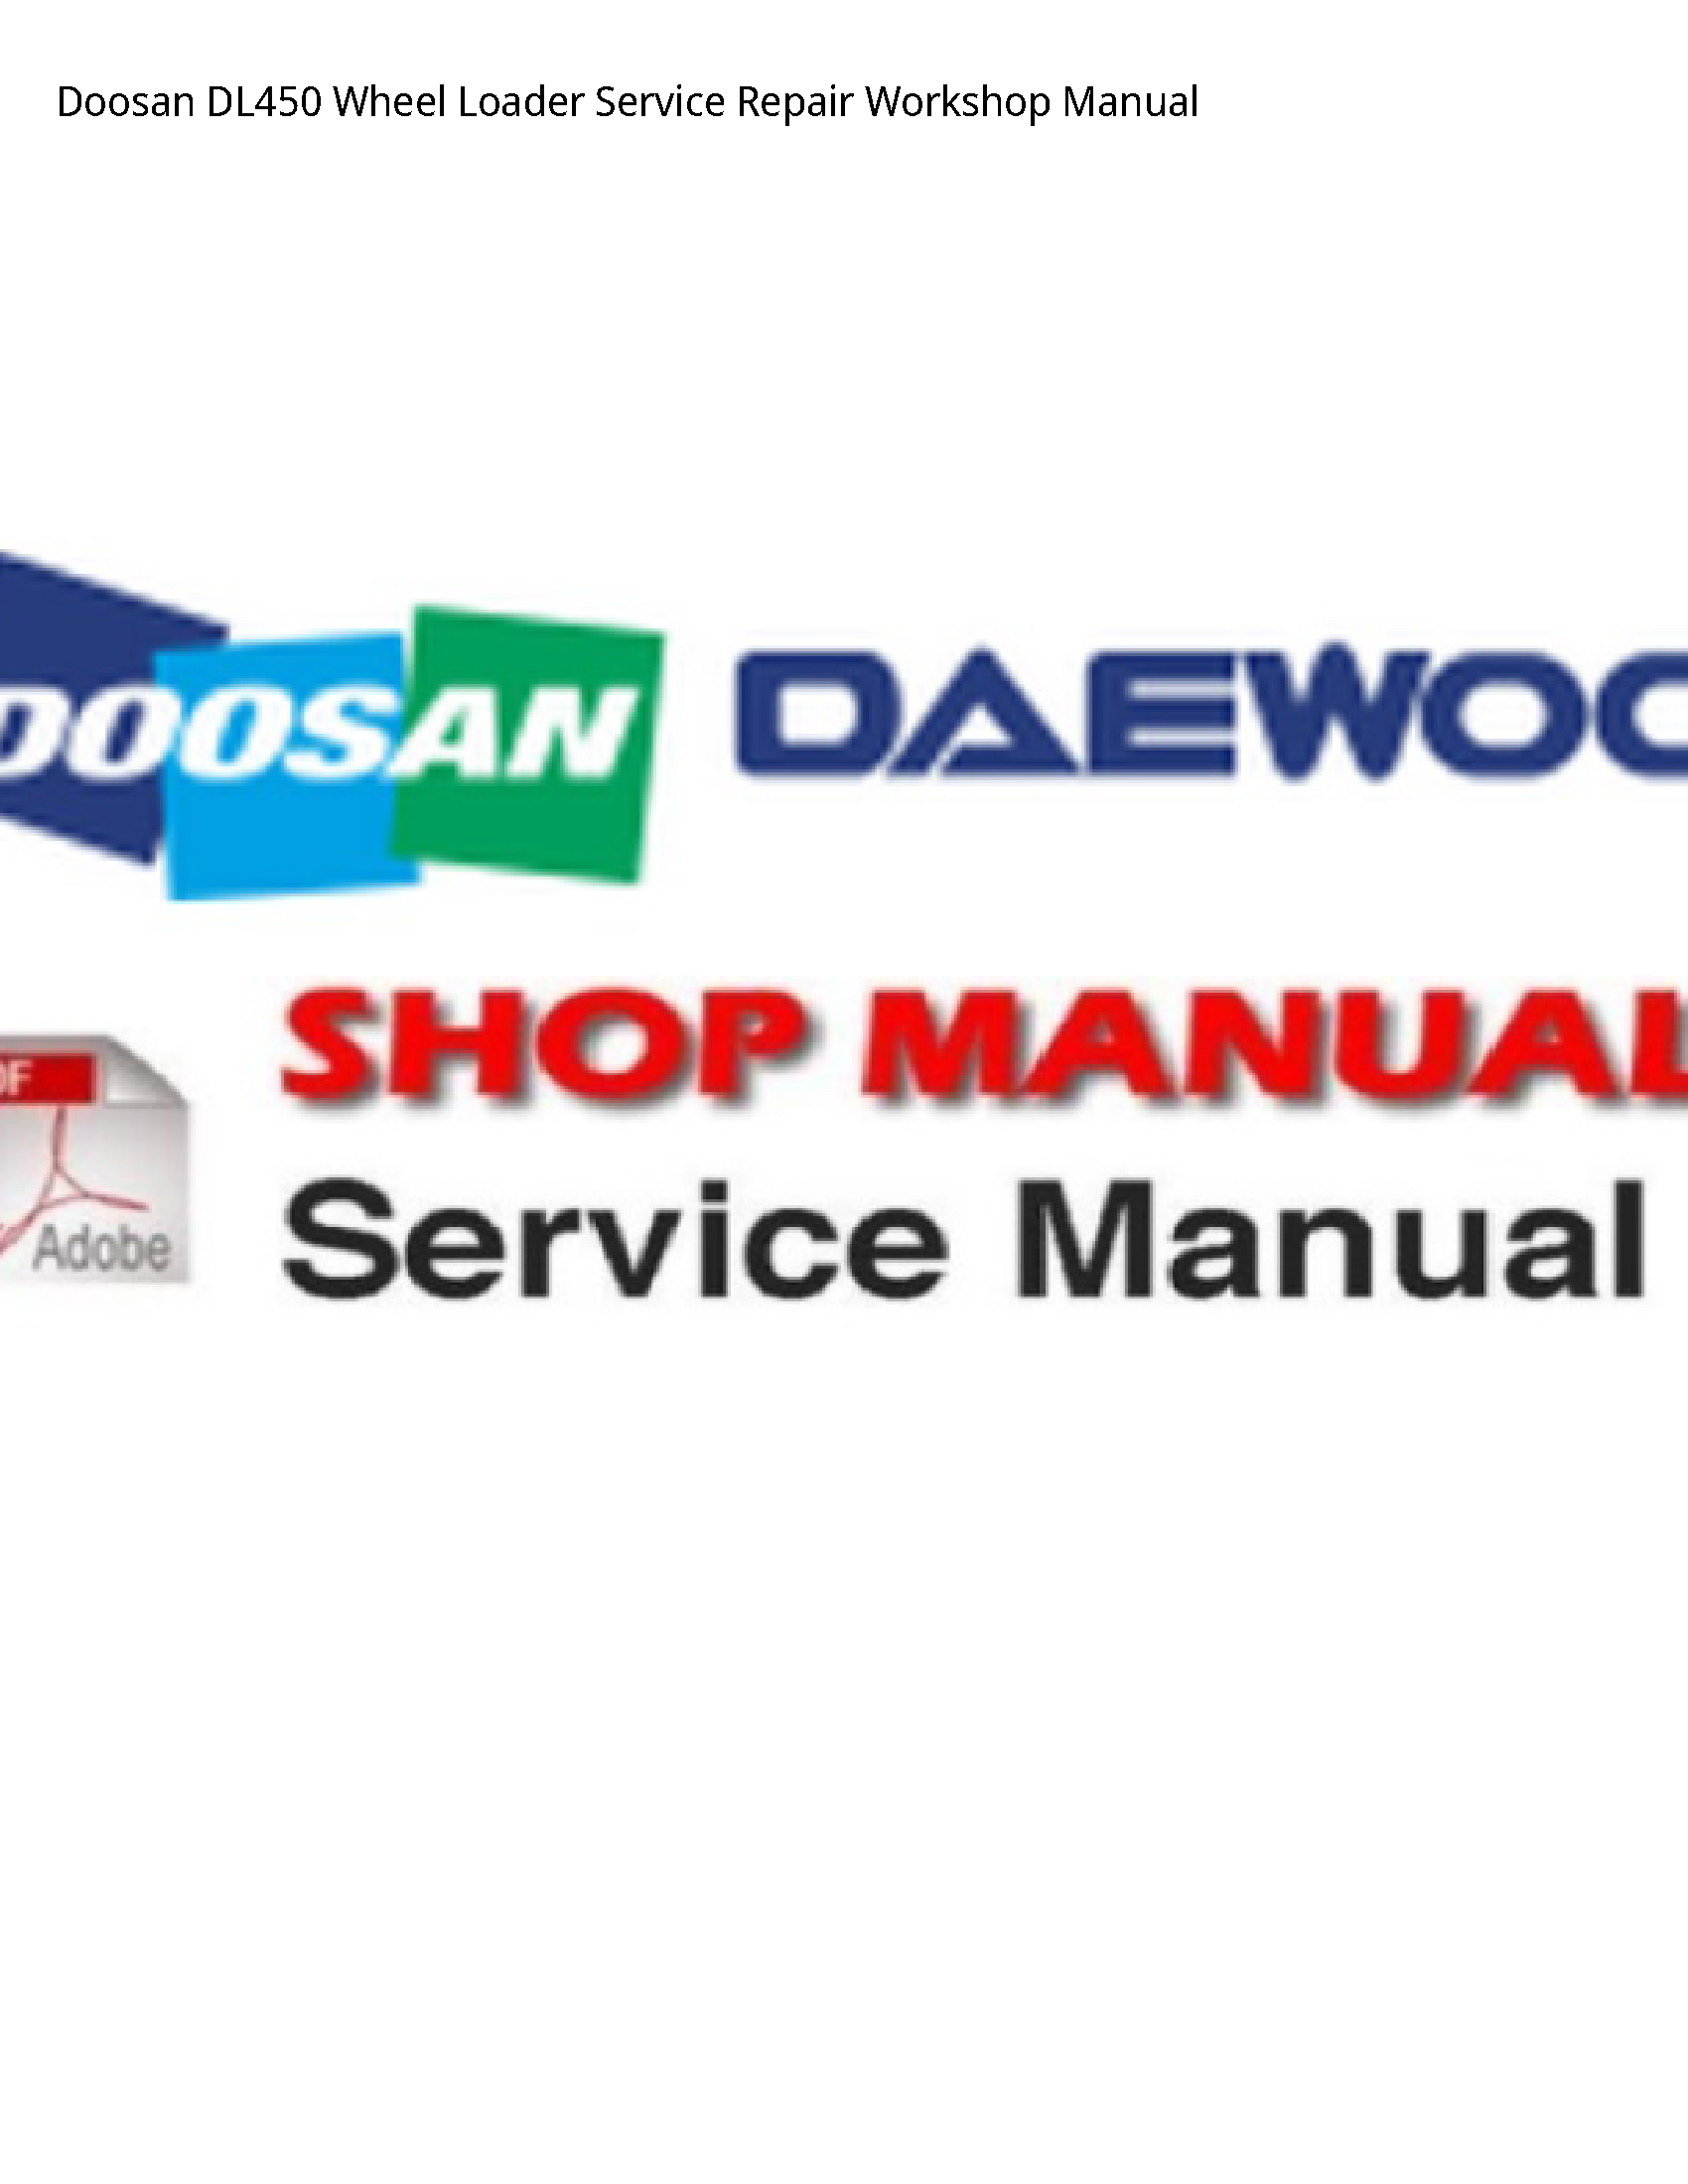 Doosan DL450 Wheel Loader manual